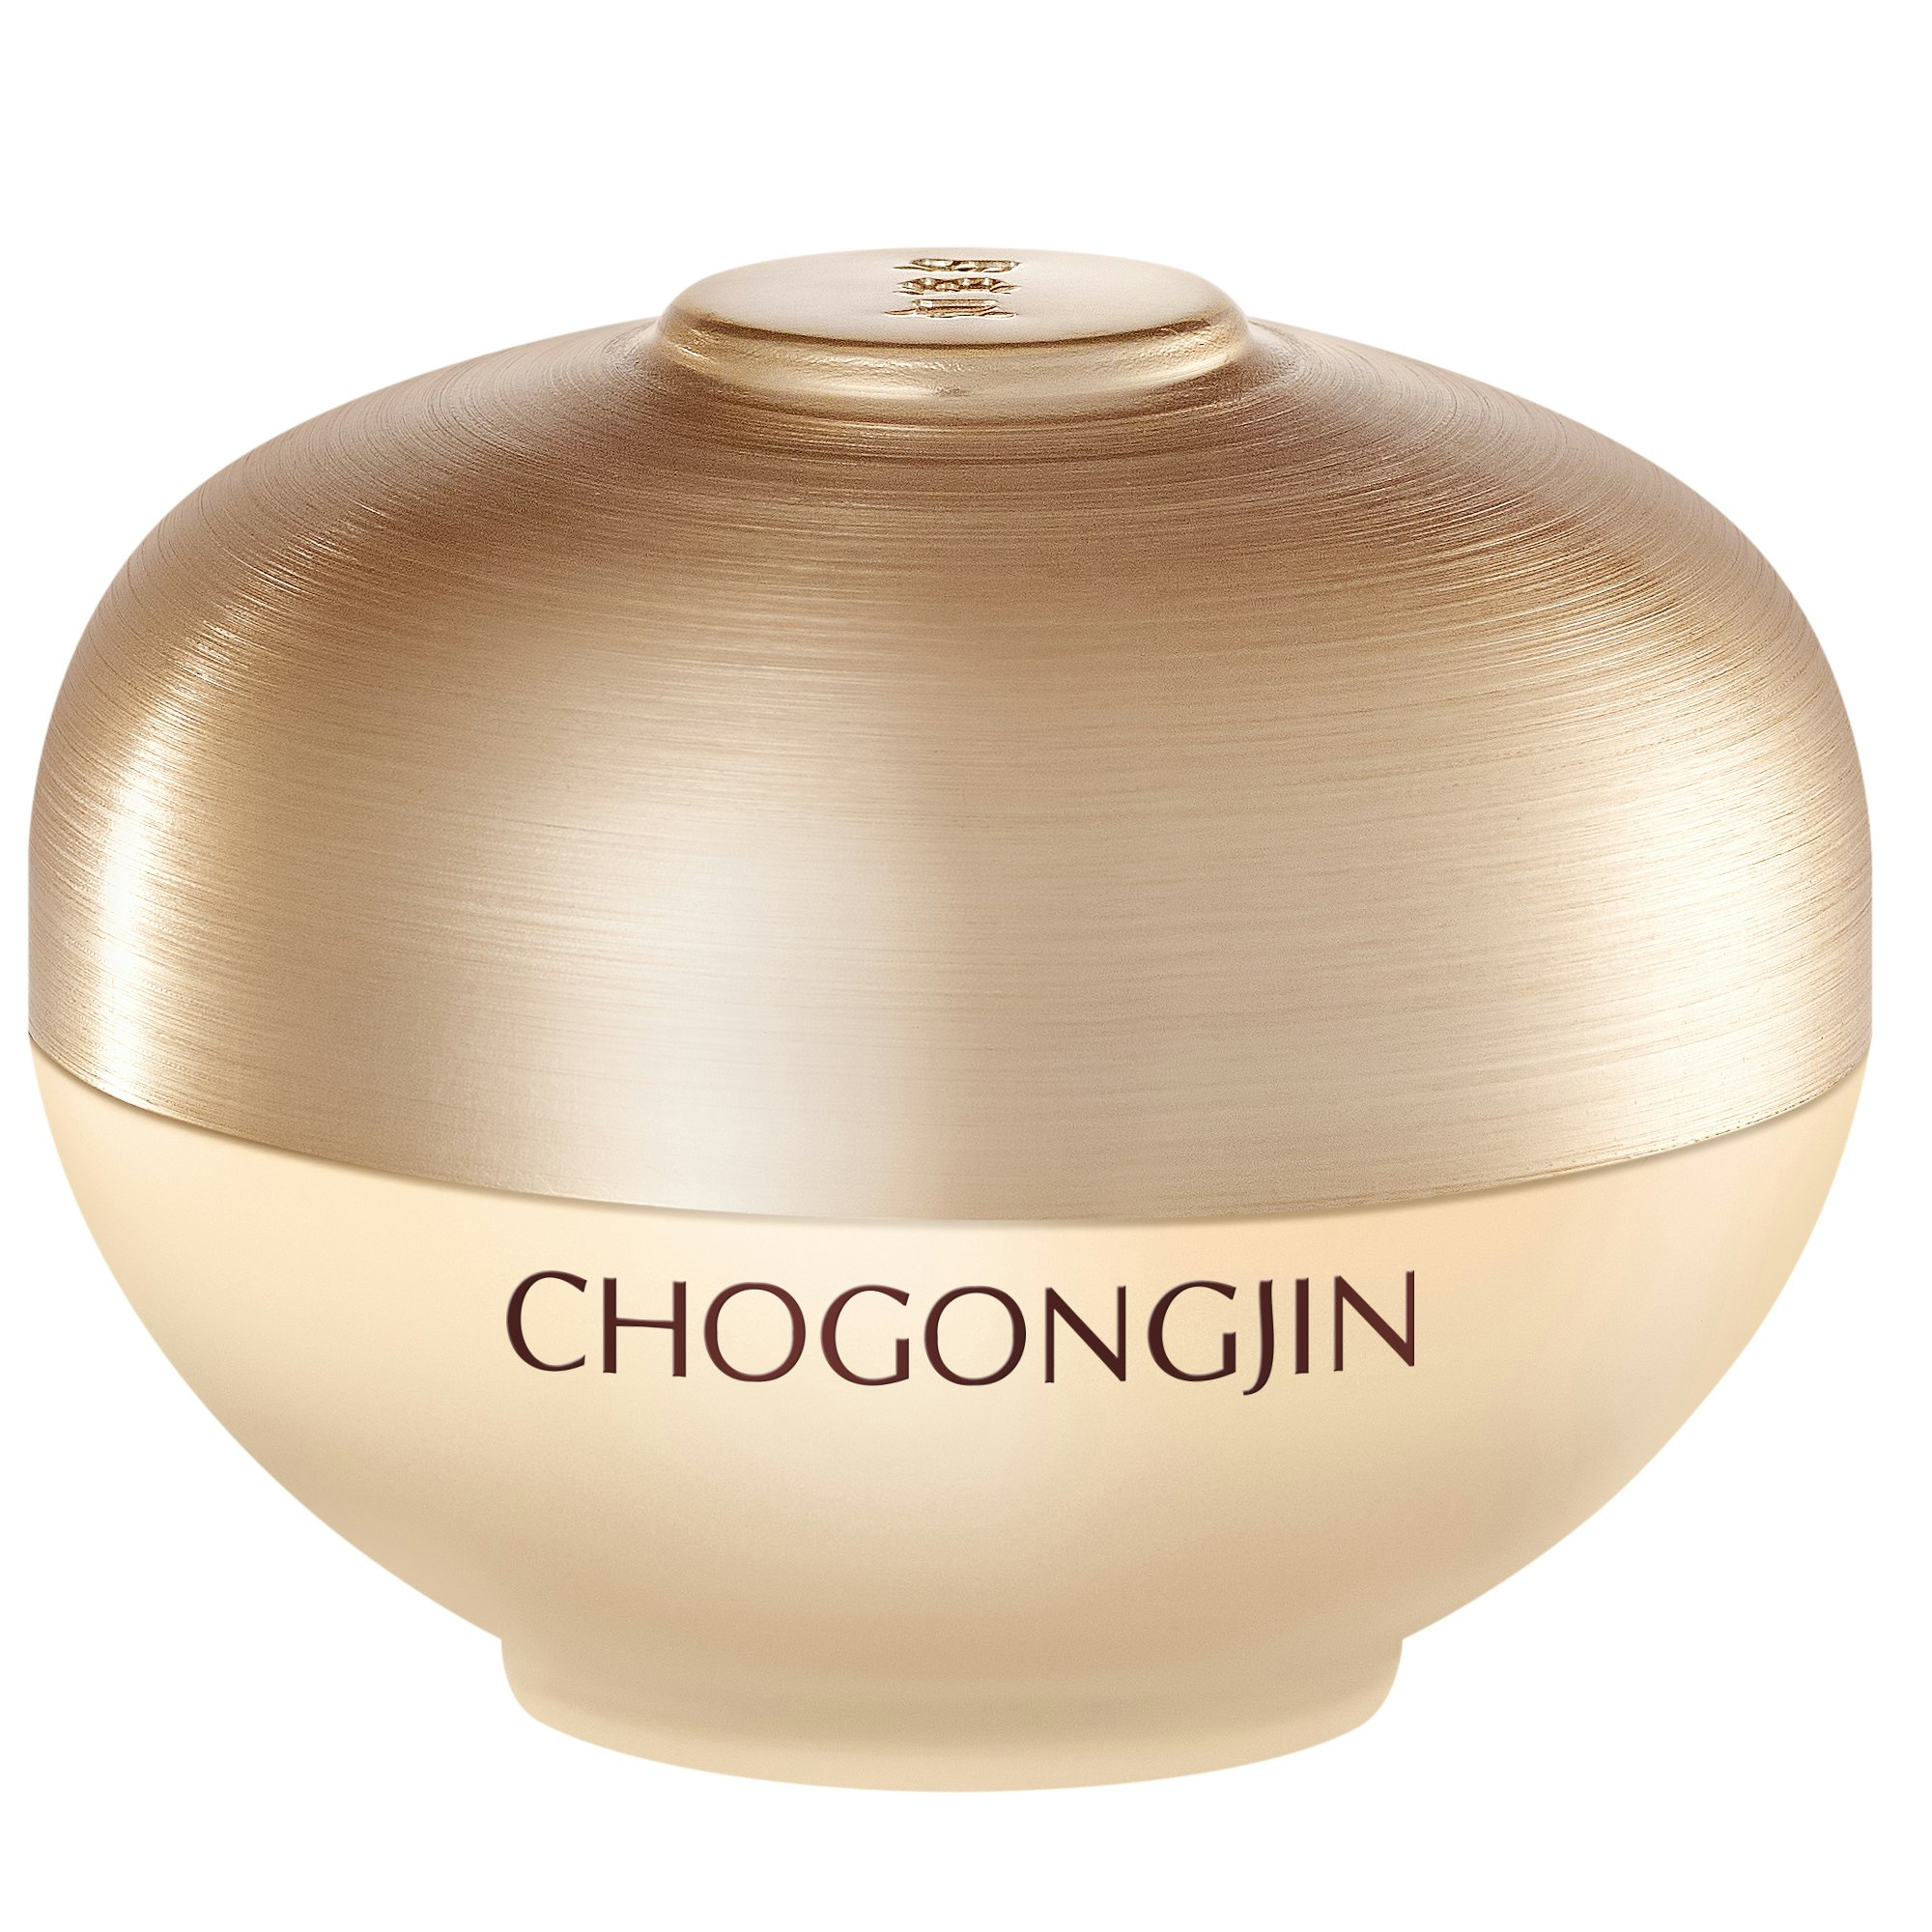 MISSHA Chogongjin Geumsul Jin Eye Cream, 30 ml